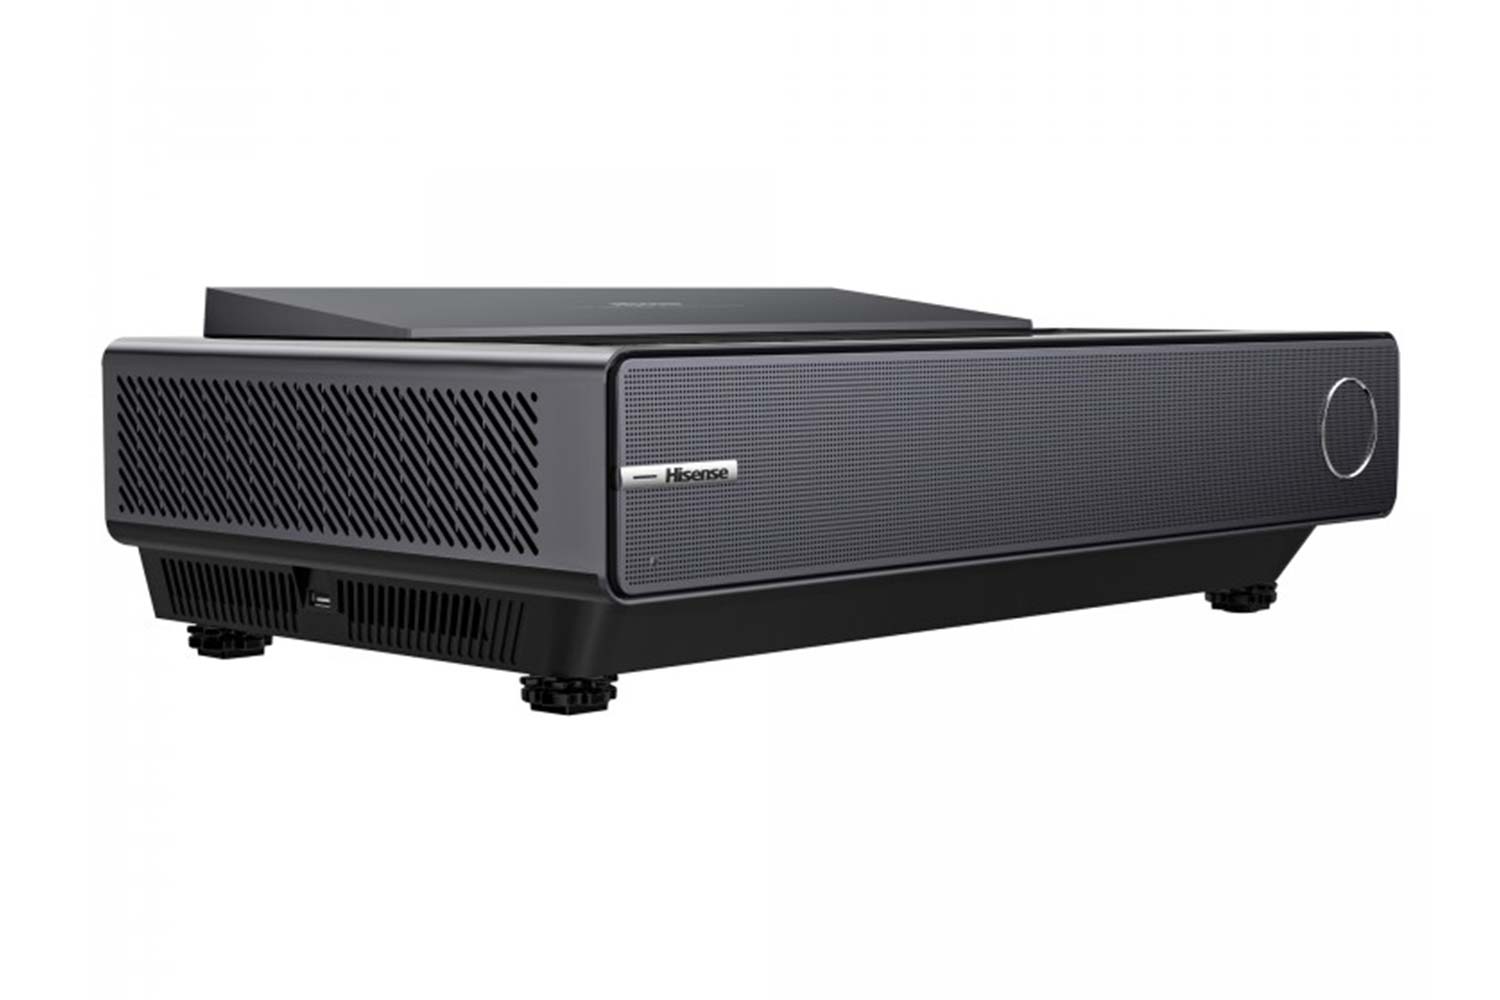 Hisense PX1-Pro TriChroma 4K Ultra HD Laser TV - HEIMKINORAUM Edition